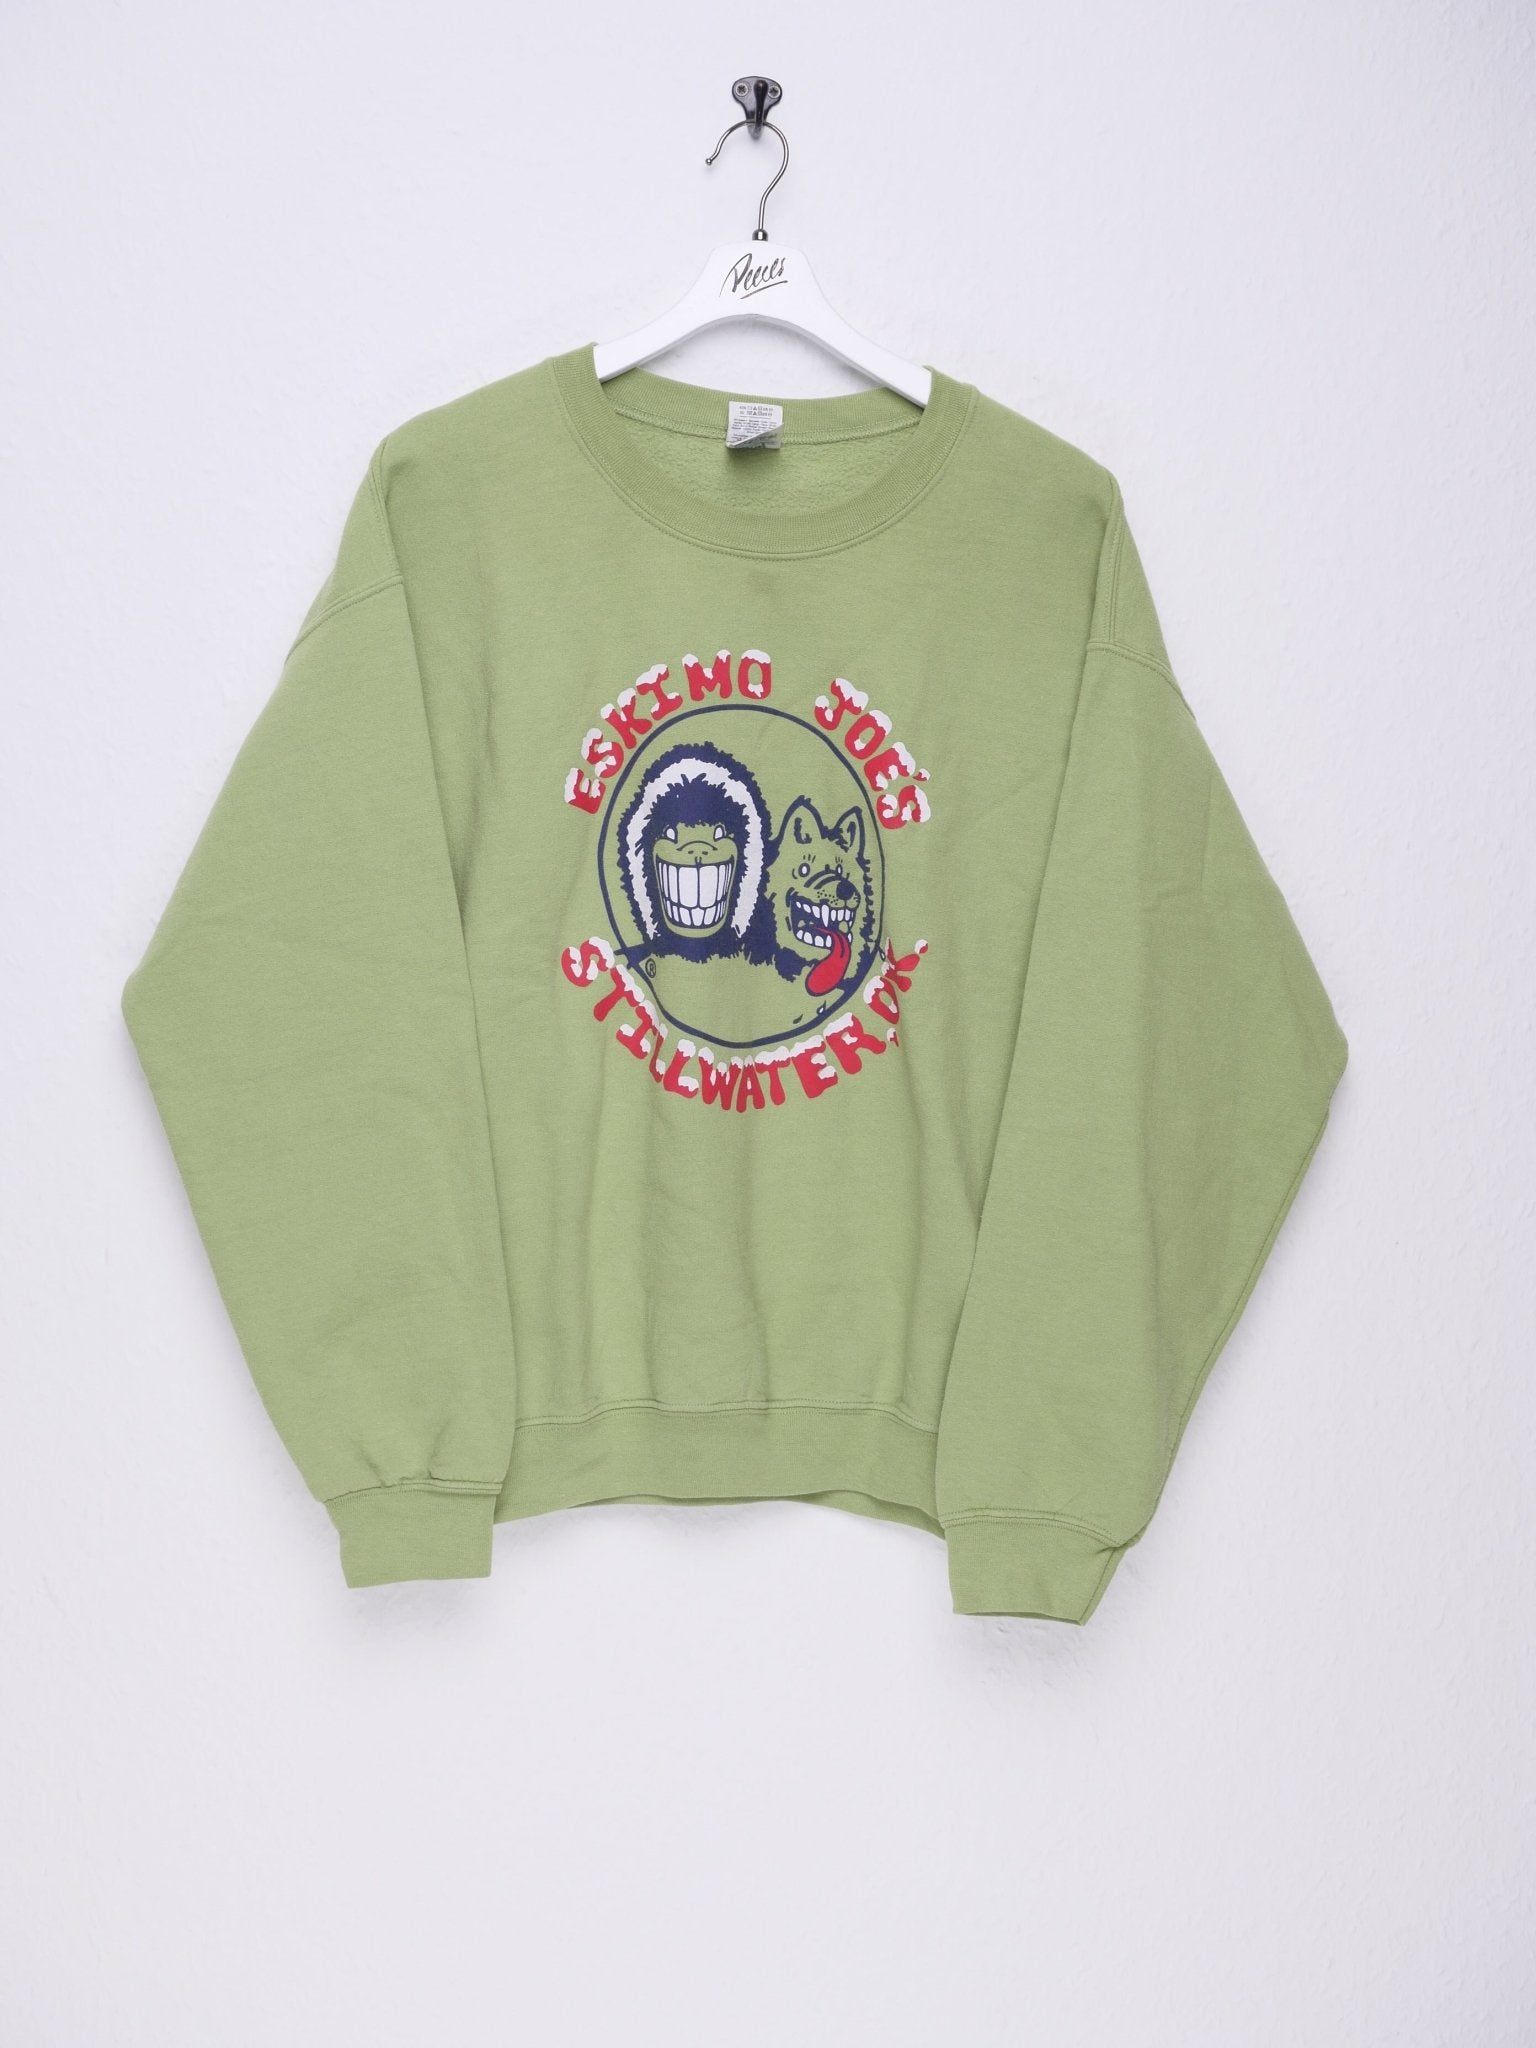 Eskimo Joe's printed green Sweater - Peeces